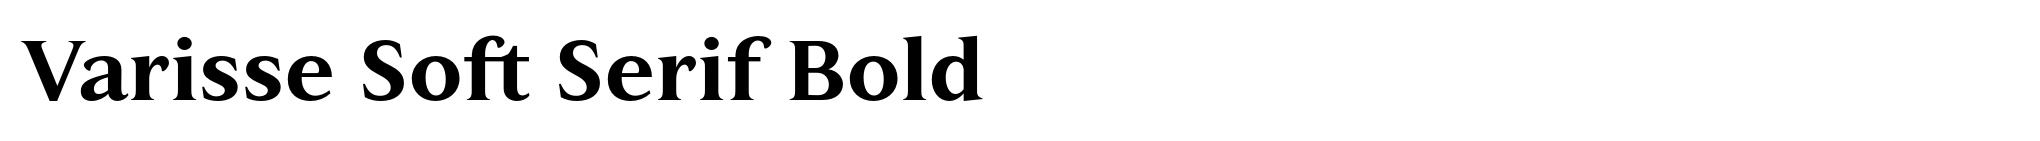 Varisse Soft Serif Bold image